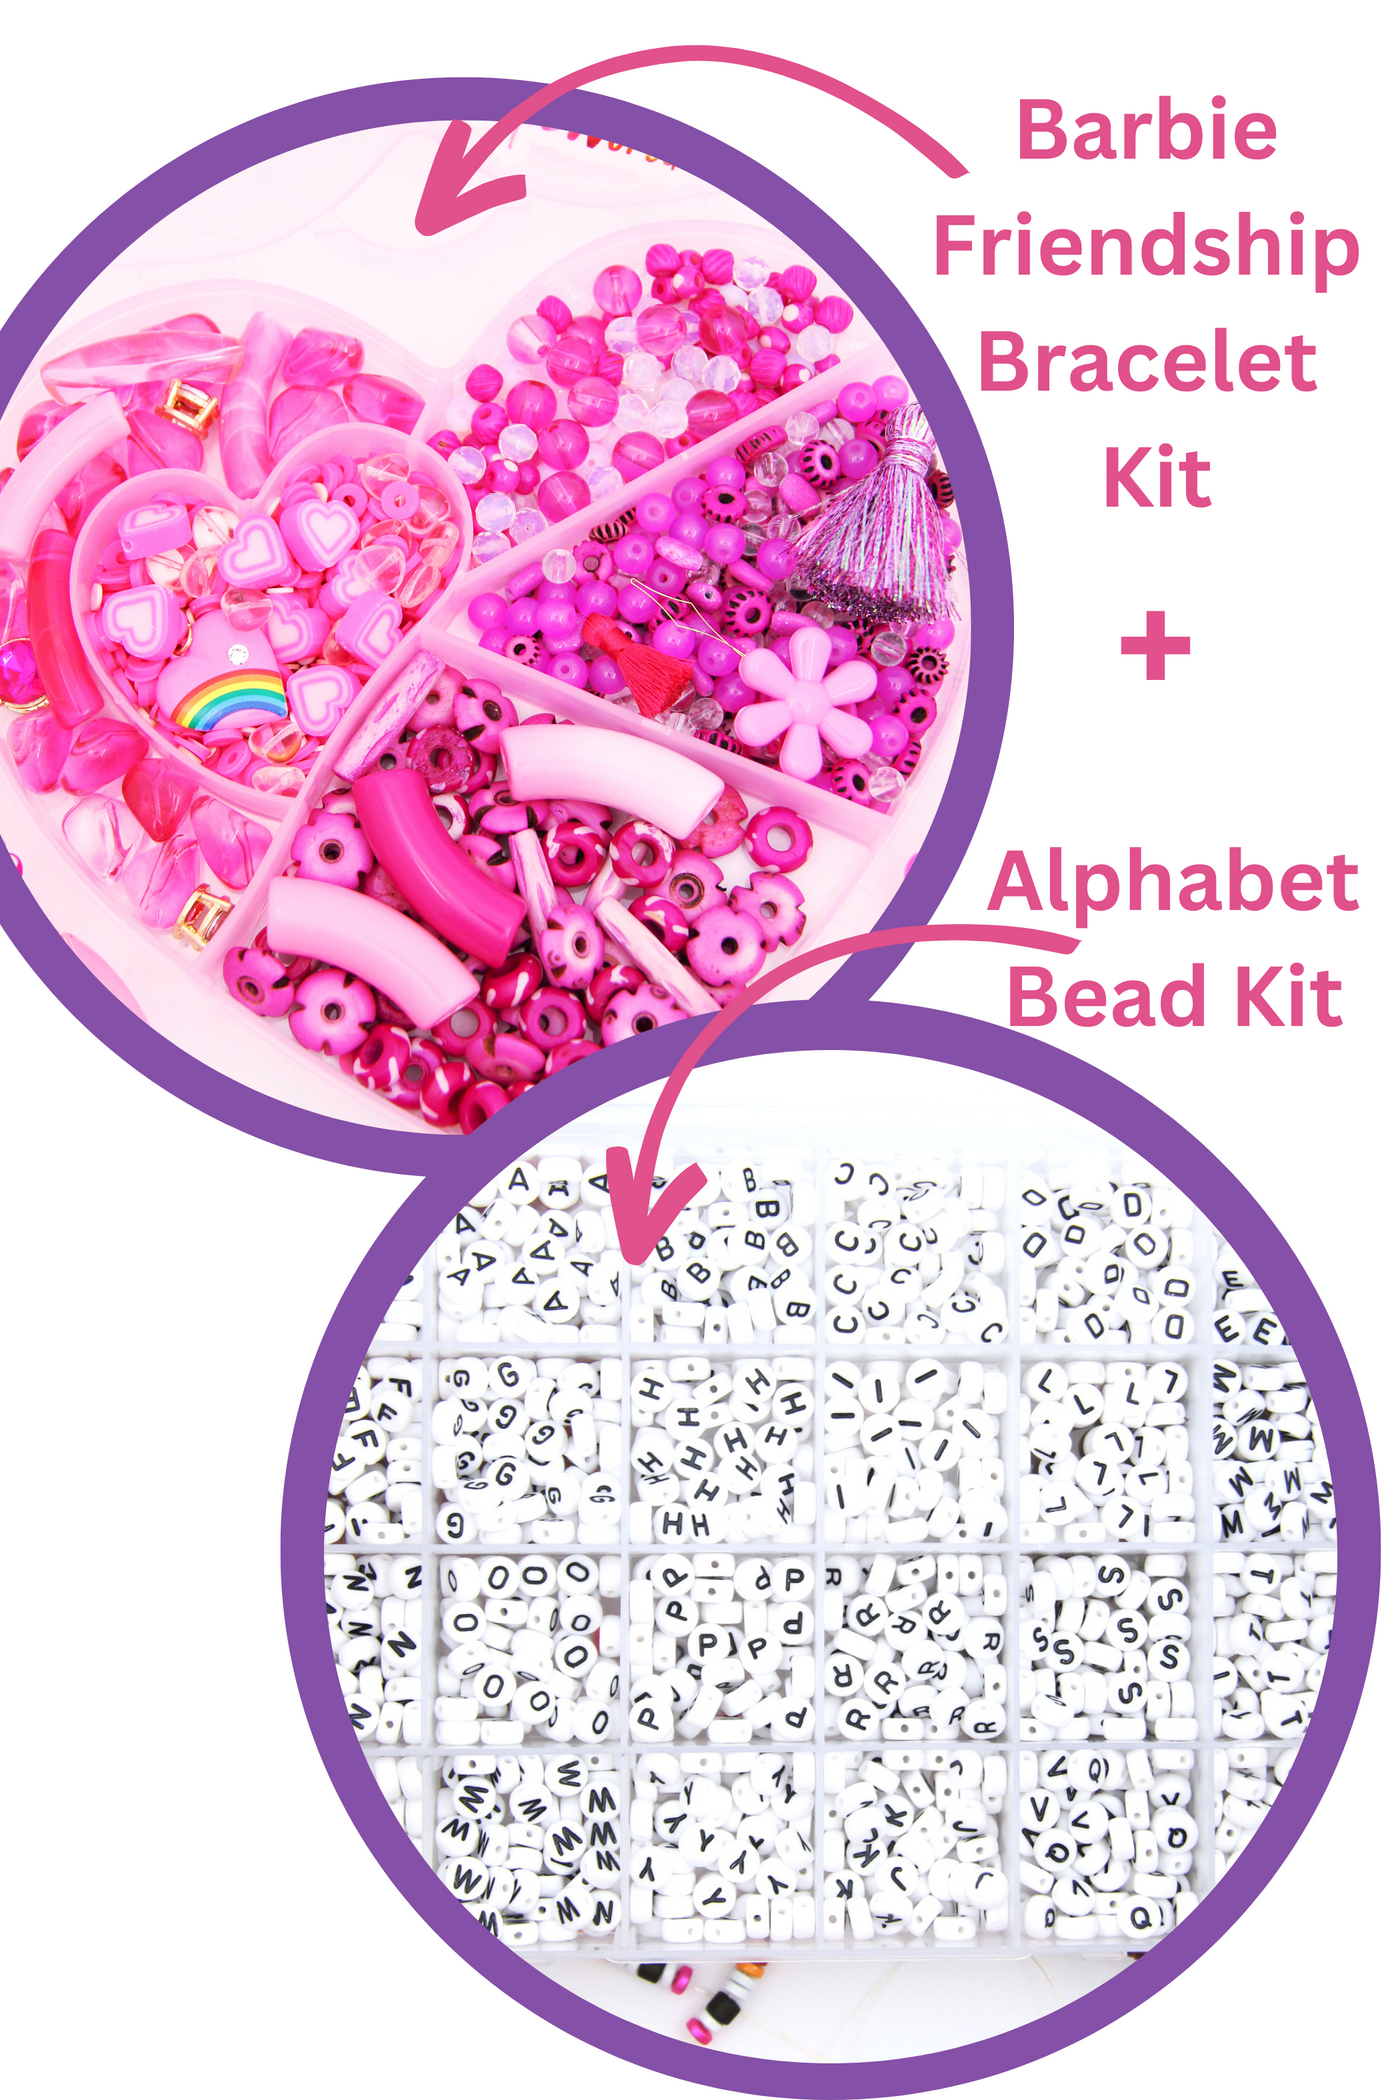 Barbie Friendship Bracelet Kit: Make 16+ Barbiecore Hot Pink Beaded Friendship Bracelets